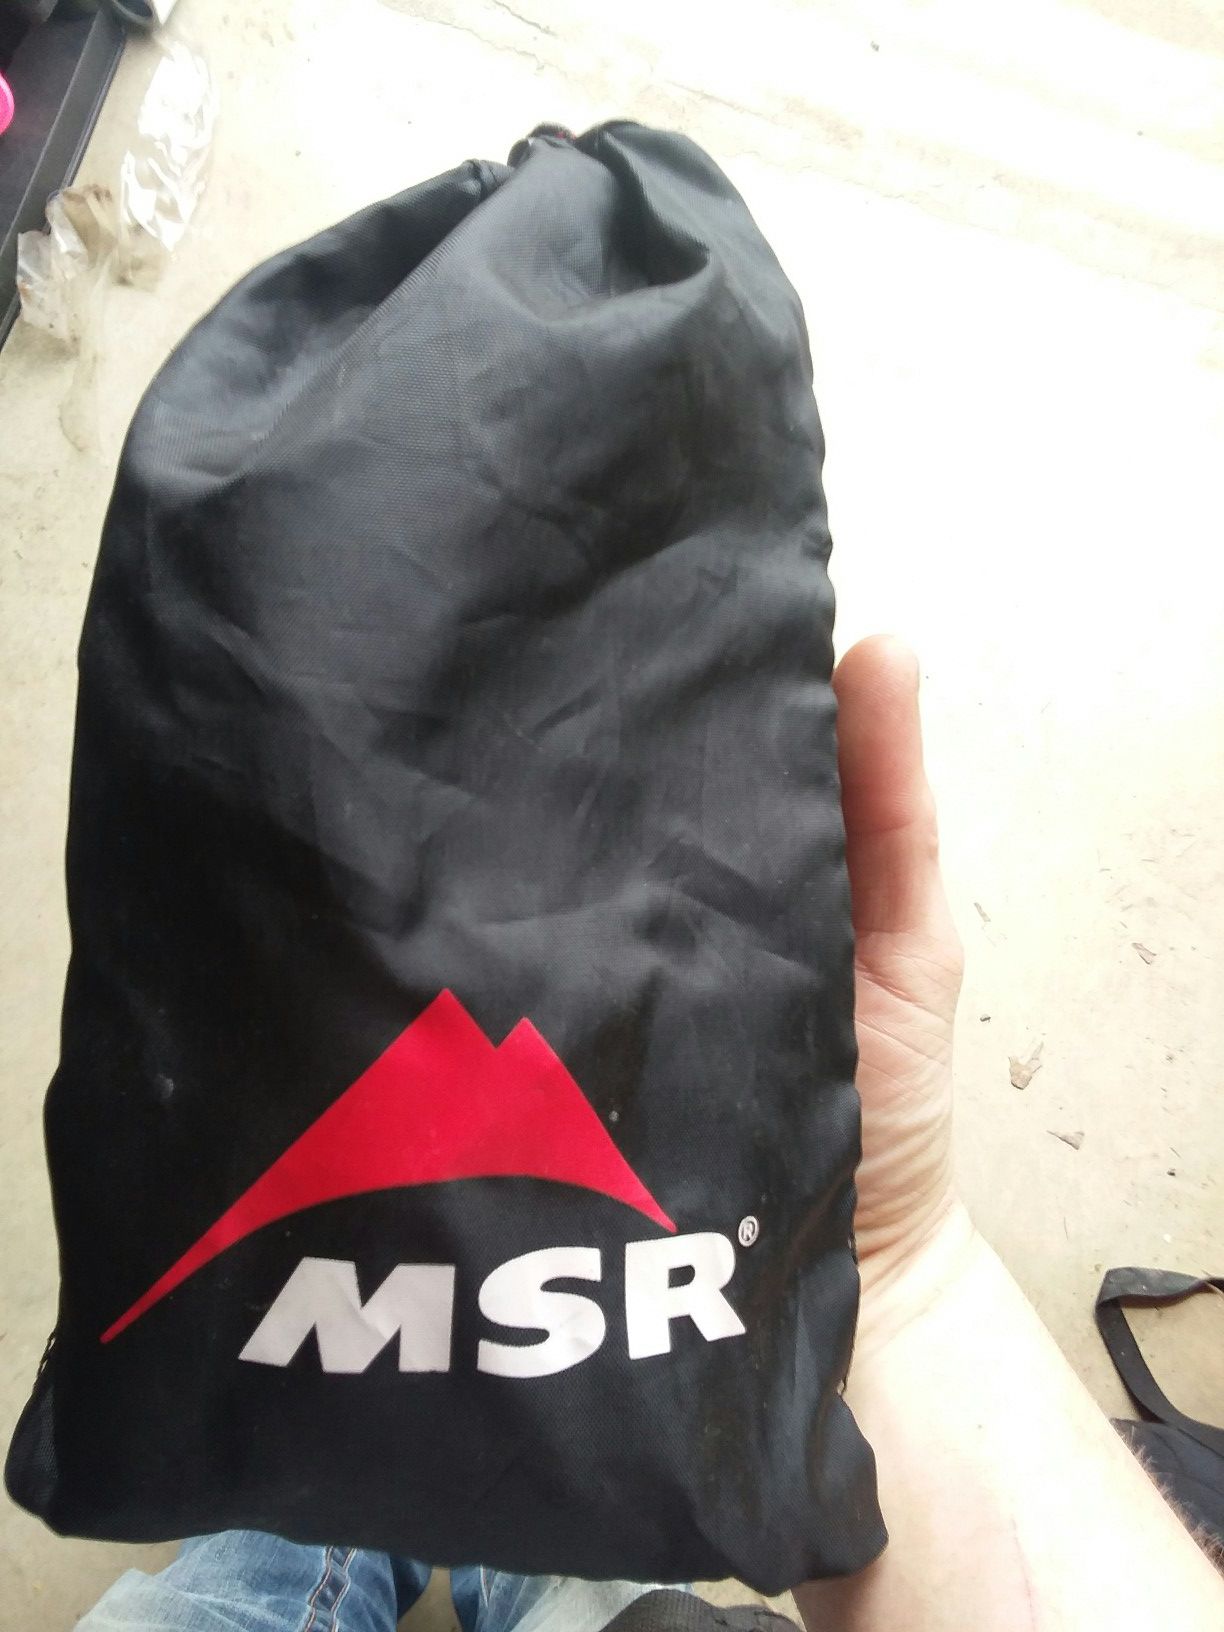 Msr camping water filter